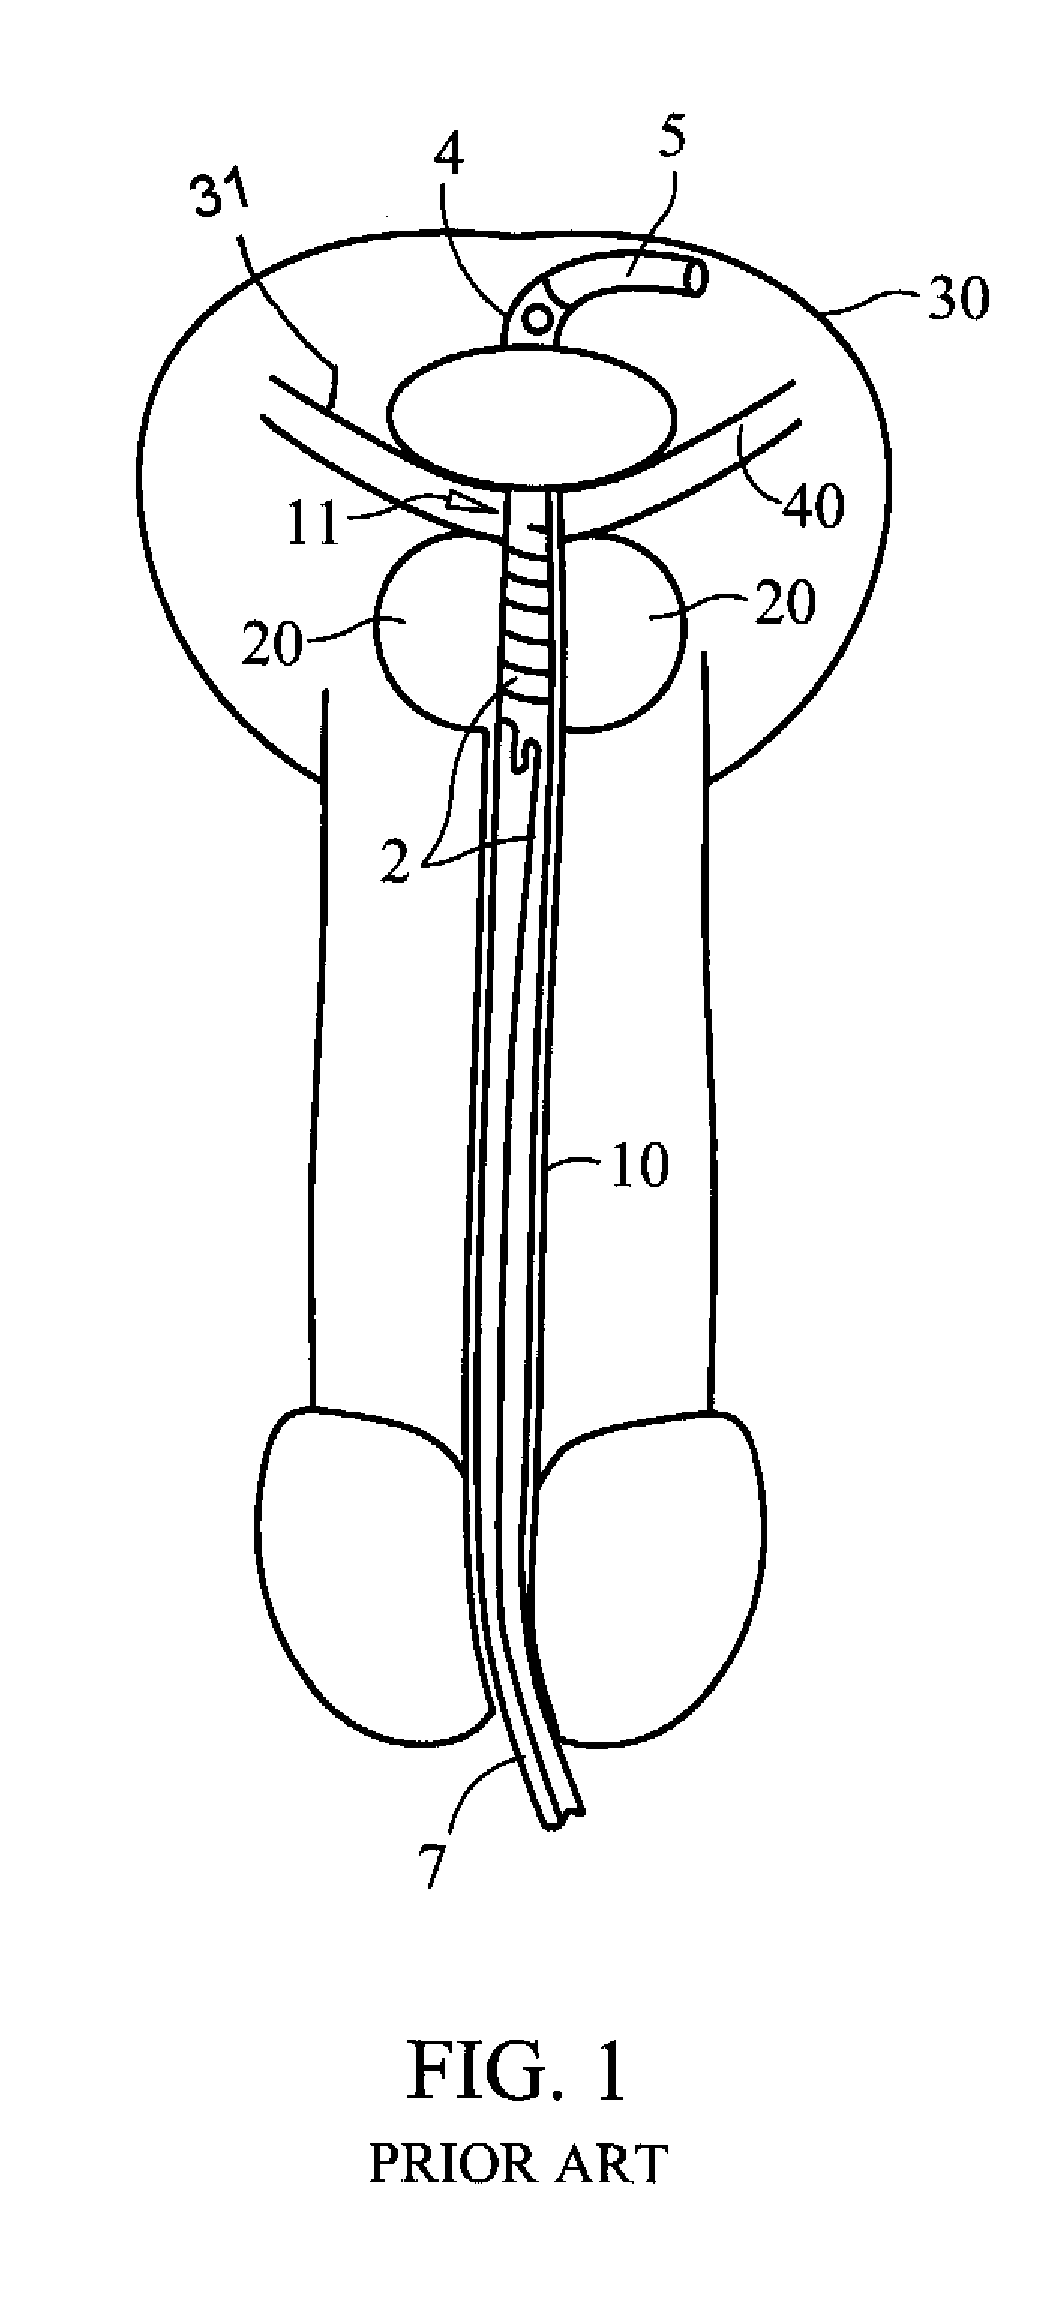 Illuminating balloon catheter and method for using the catheter